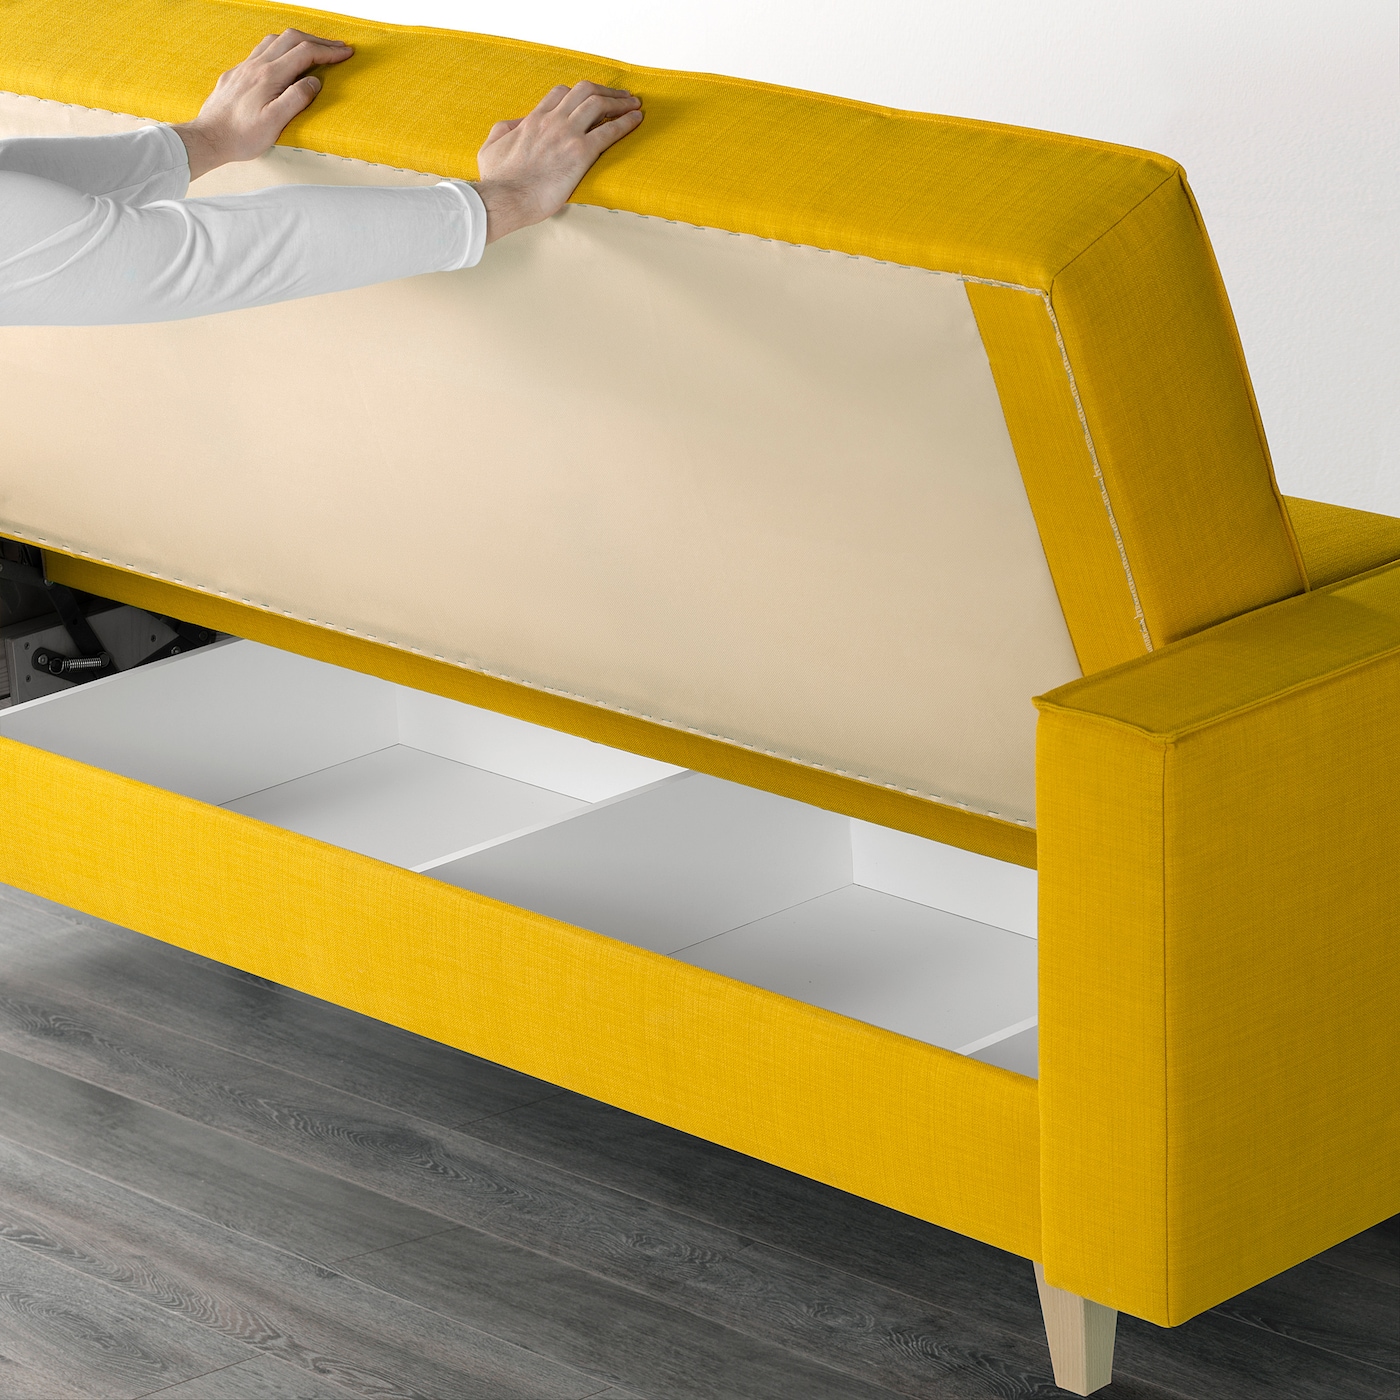 askesta аскеста 3 местный диван кровать шифтебу желтый